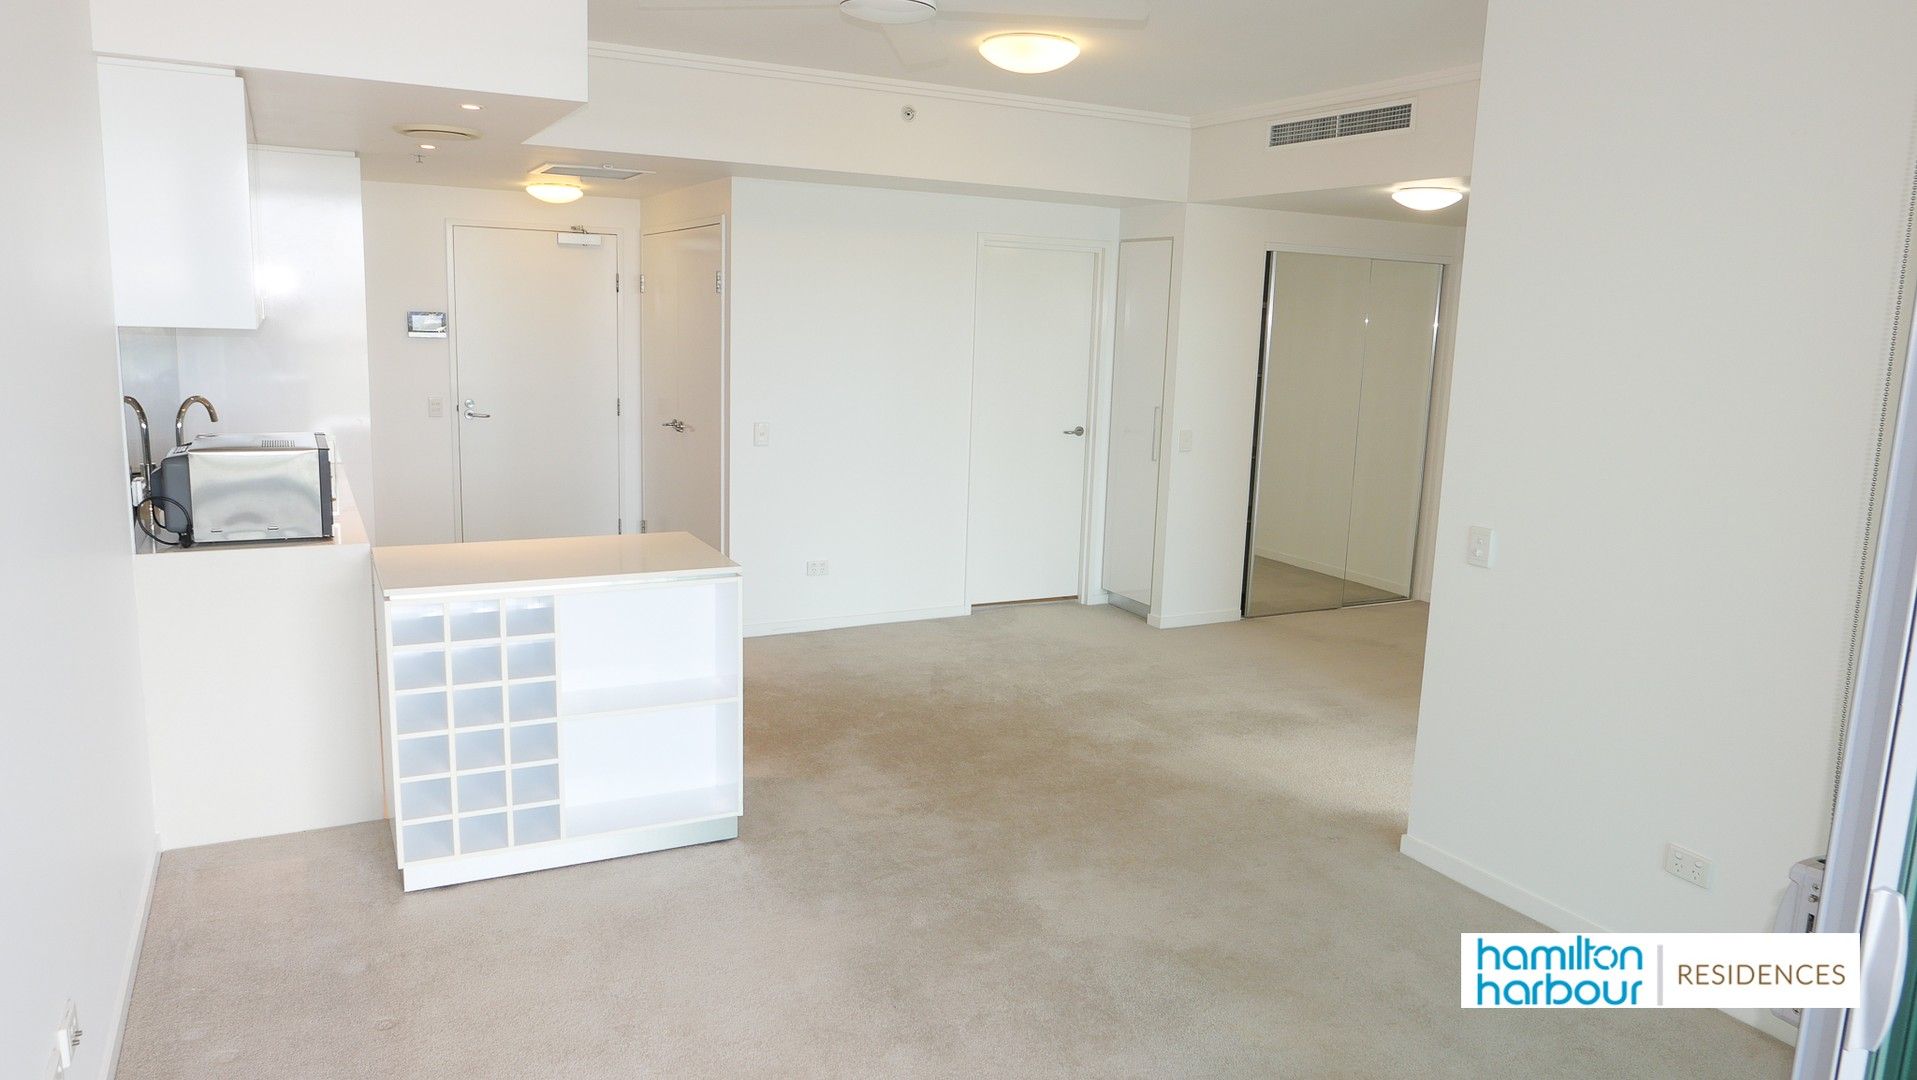 1 bedrooms Apartment / Unit / Flat in 10409 8 Harbour Road HAMILTON QLD, 4007